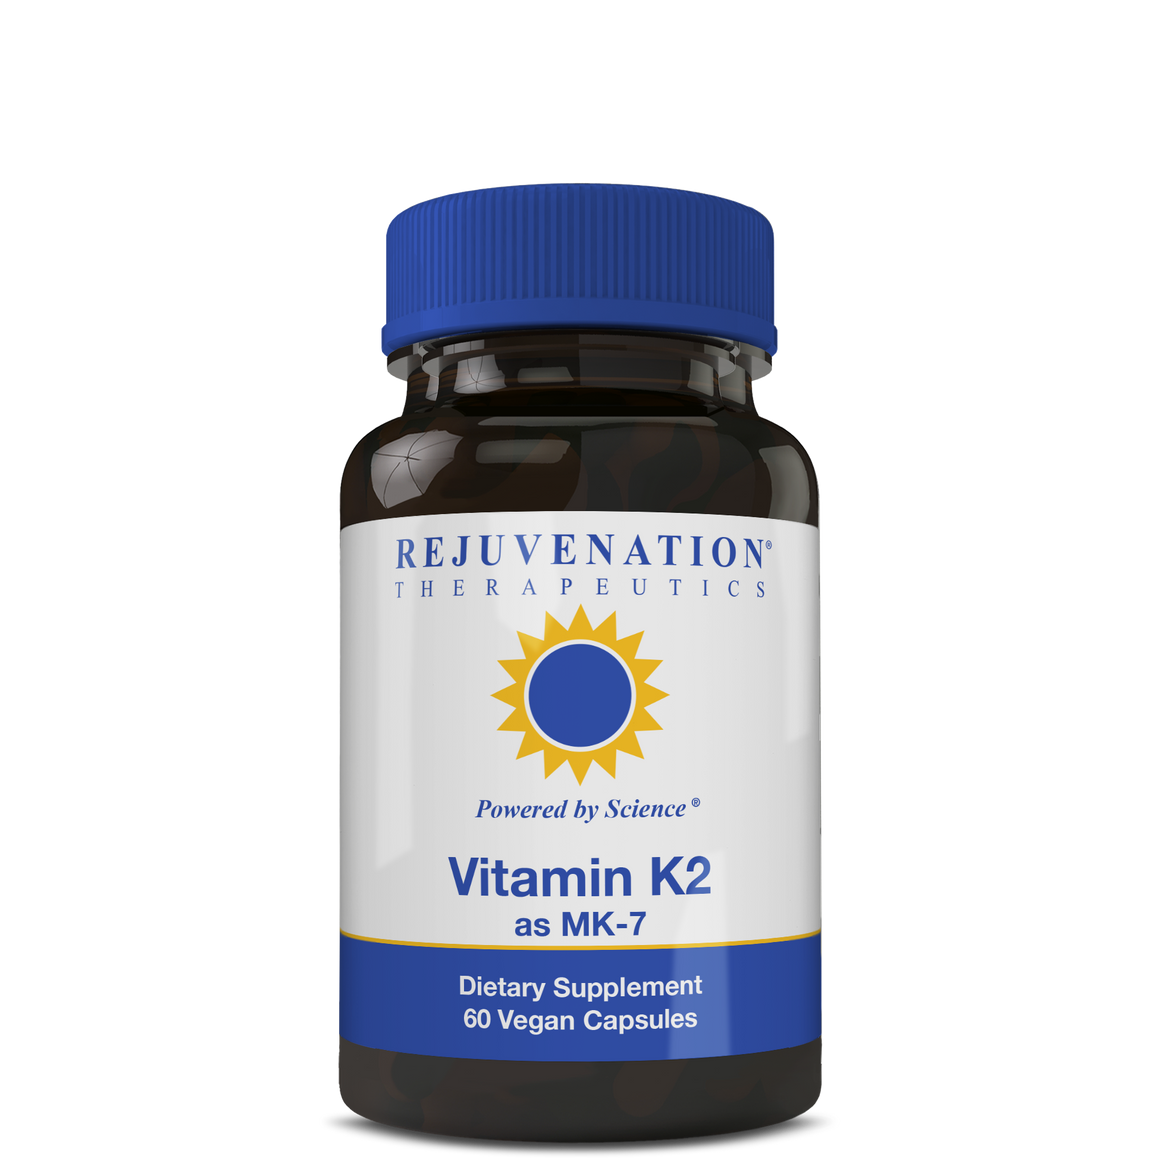 Vitamin K2 (MK-7) (300 mcg, 60 Vegan Capsules) - Promotes Bone Density & Arterial Health, Non-GMO, Gluten-Free